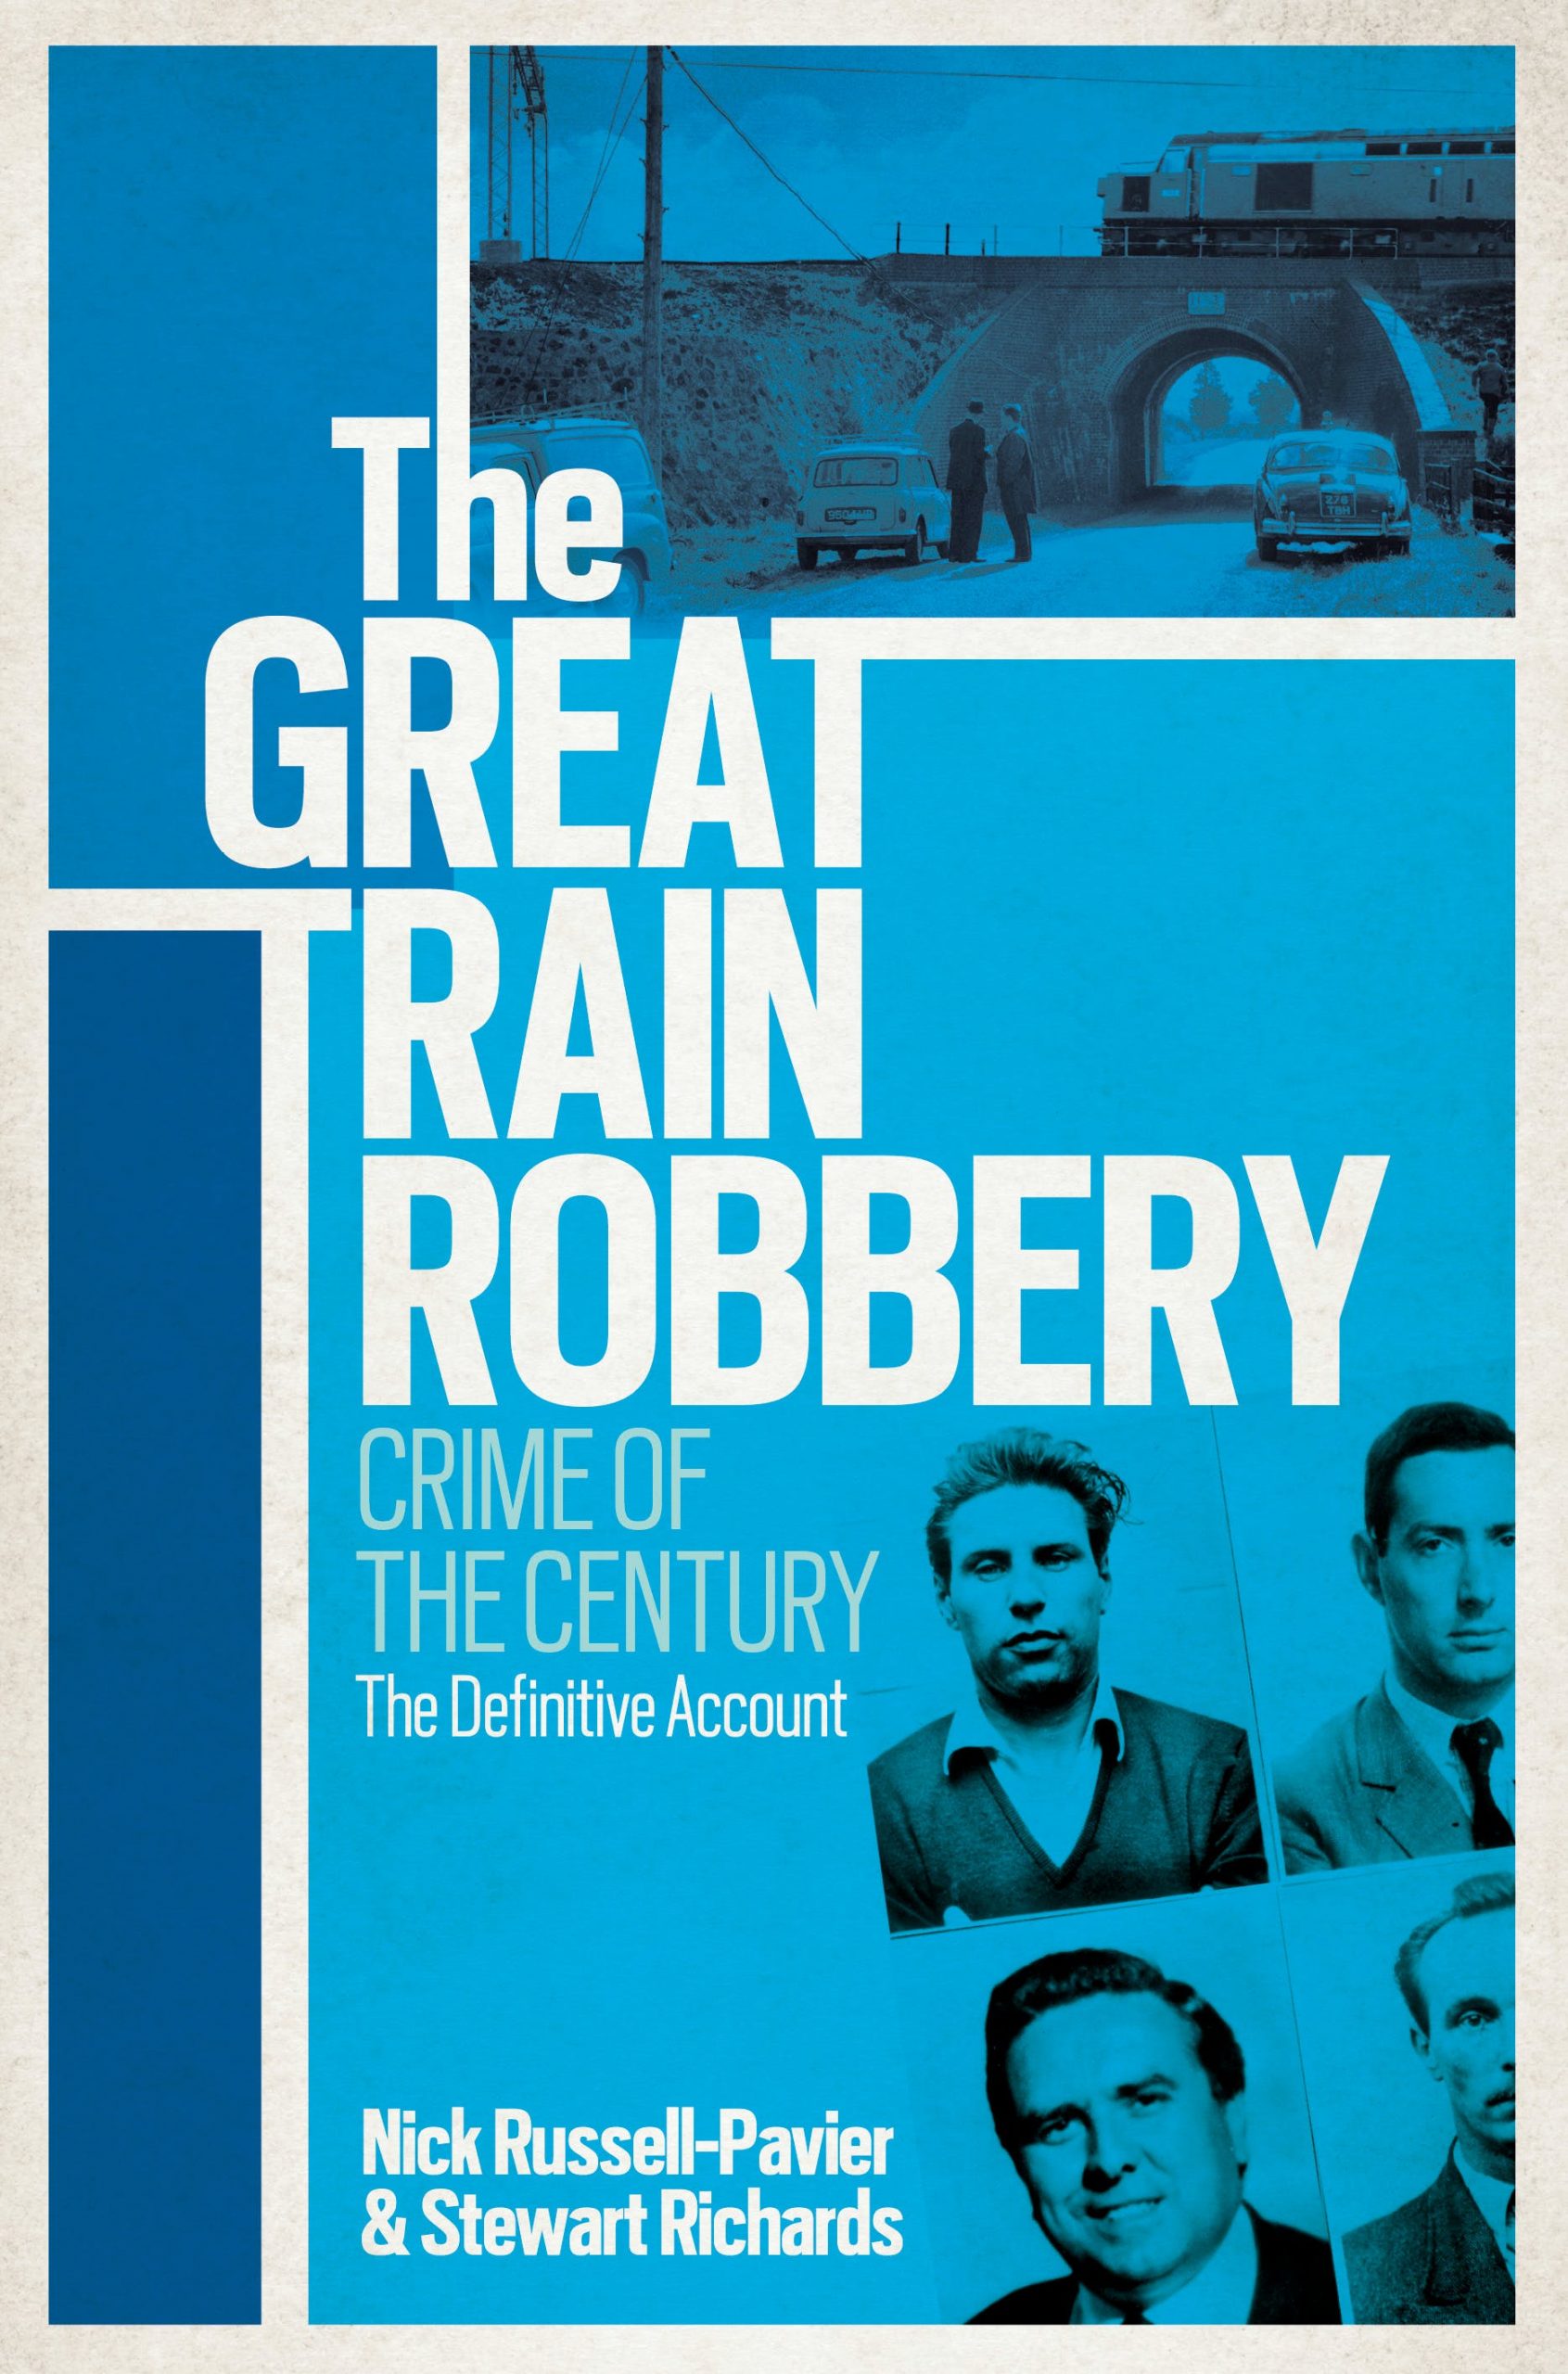 The Great Train Robbery Hardman & Swainson